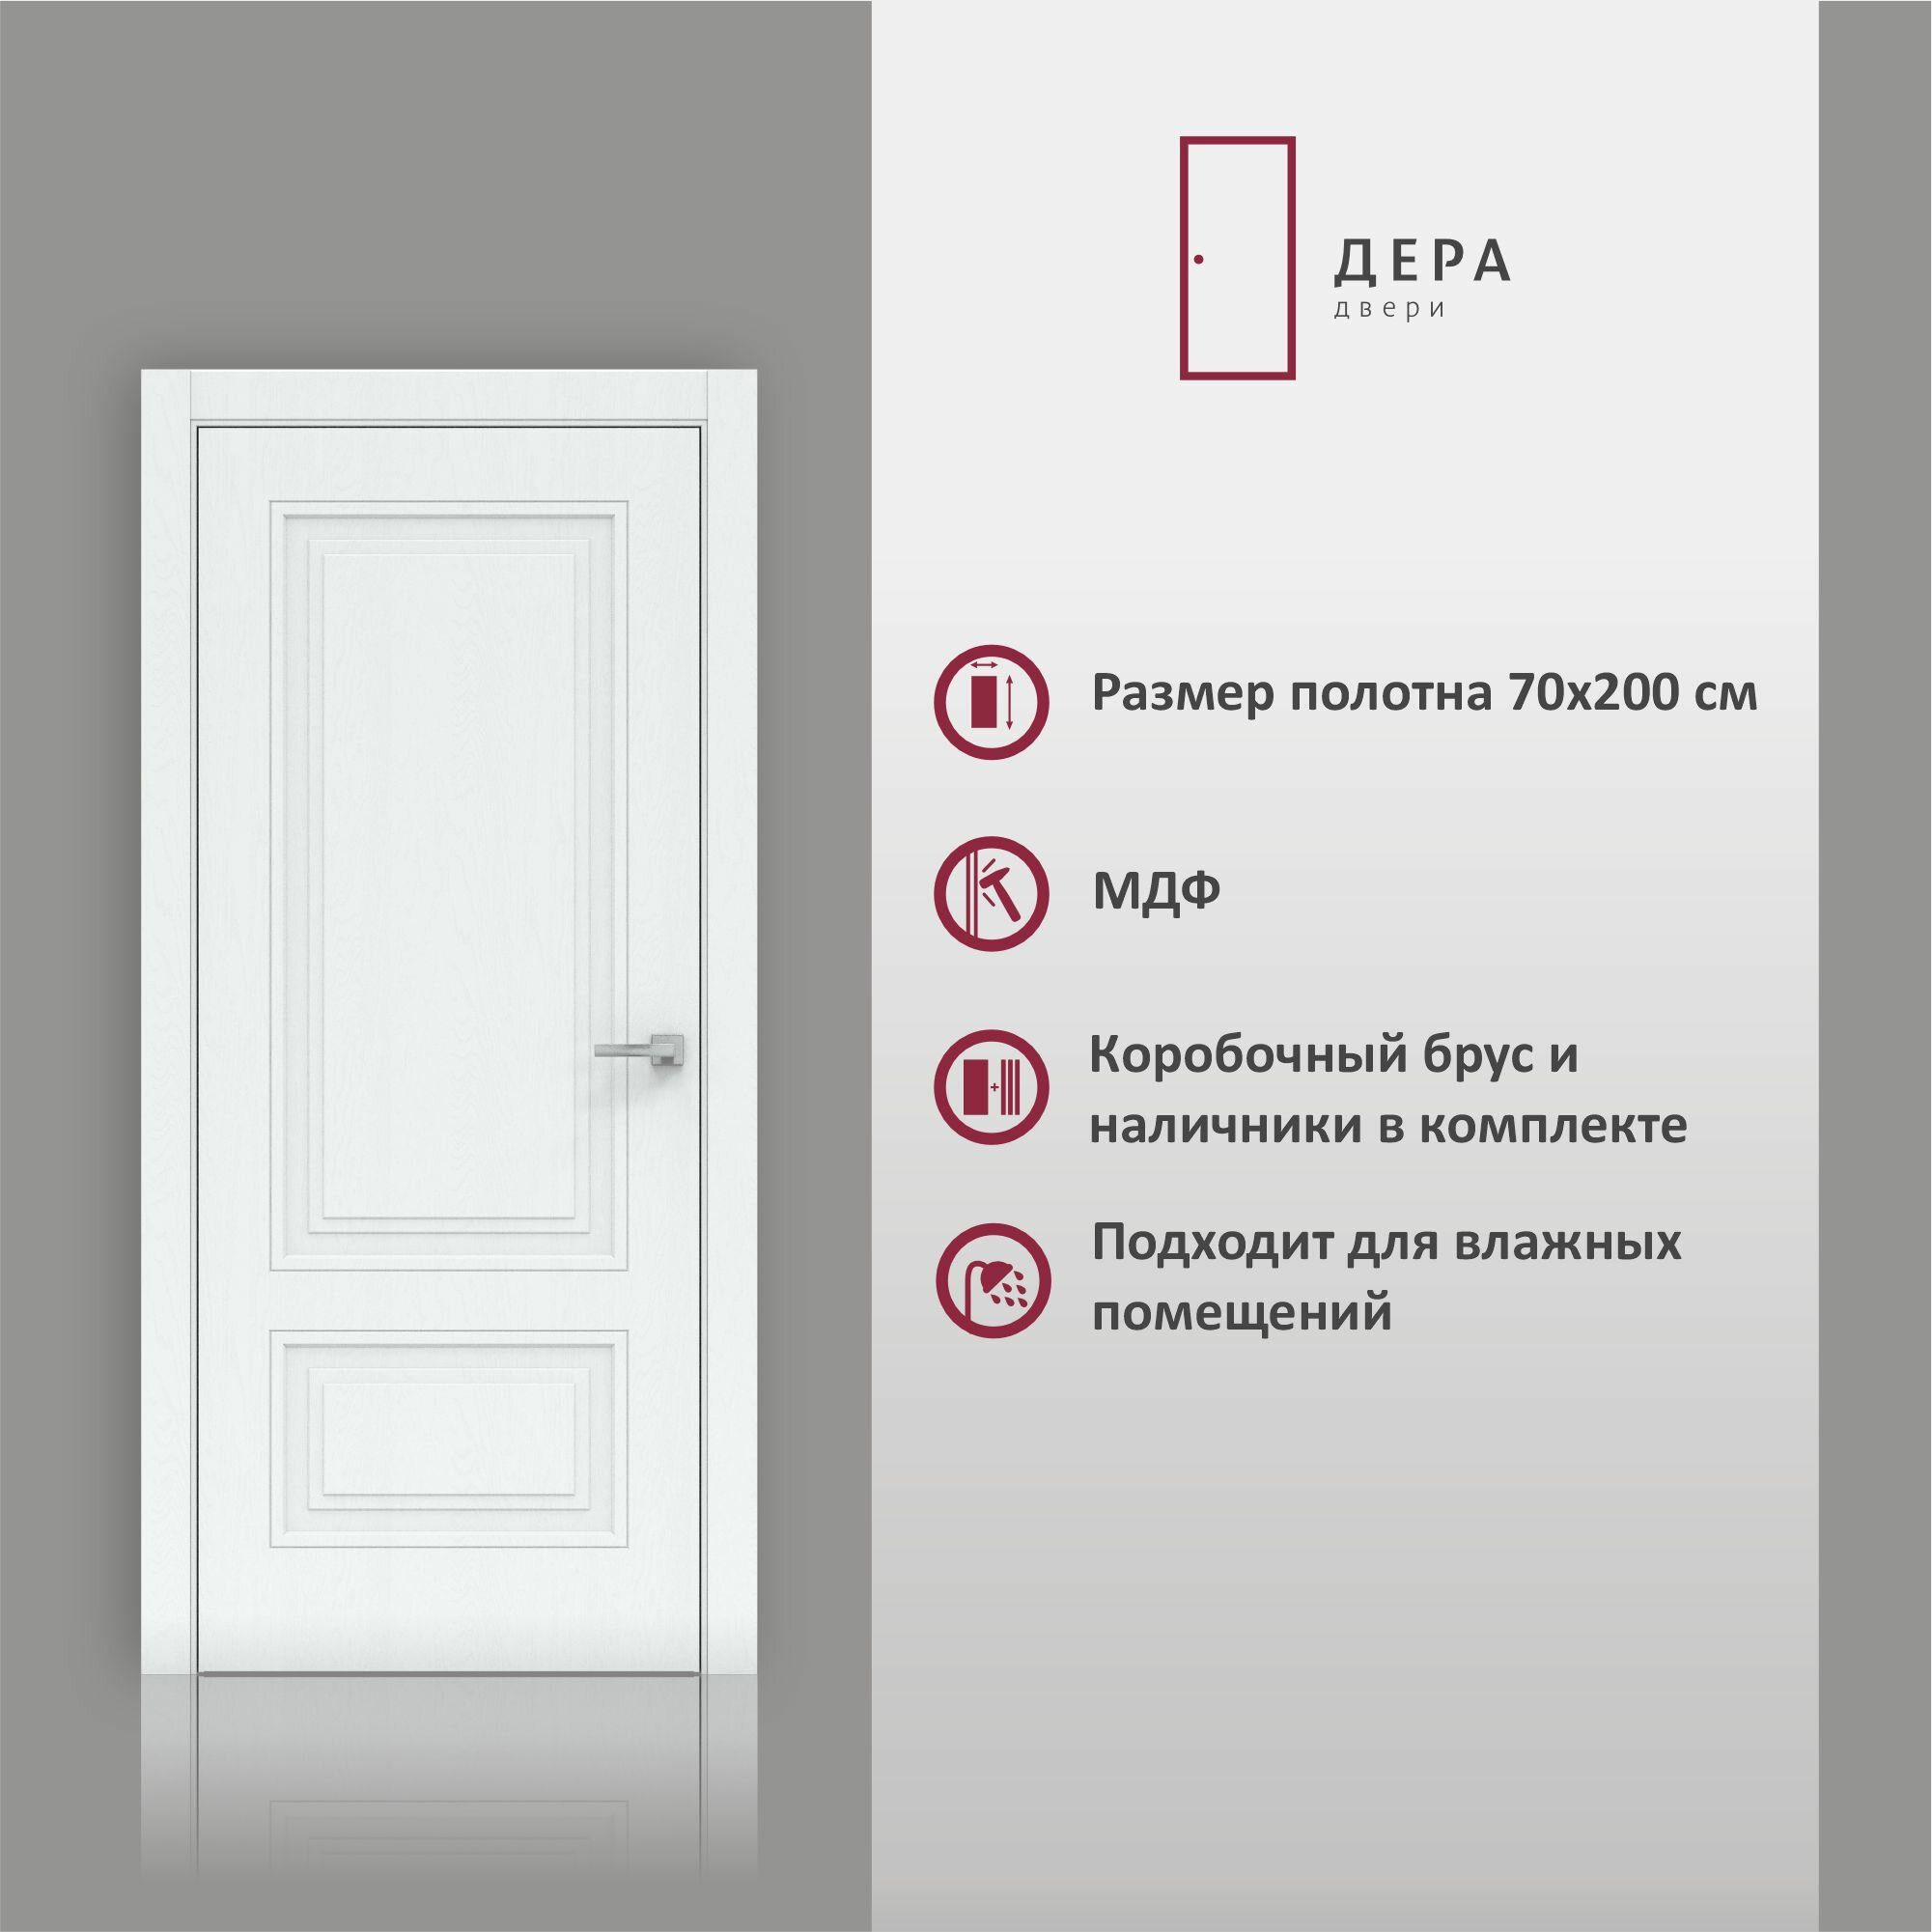 Дверь межкомнатная Дера 3302 глухая  в комплекте ПВХ Артик МДФ 80х200 см 1 шт.